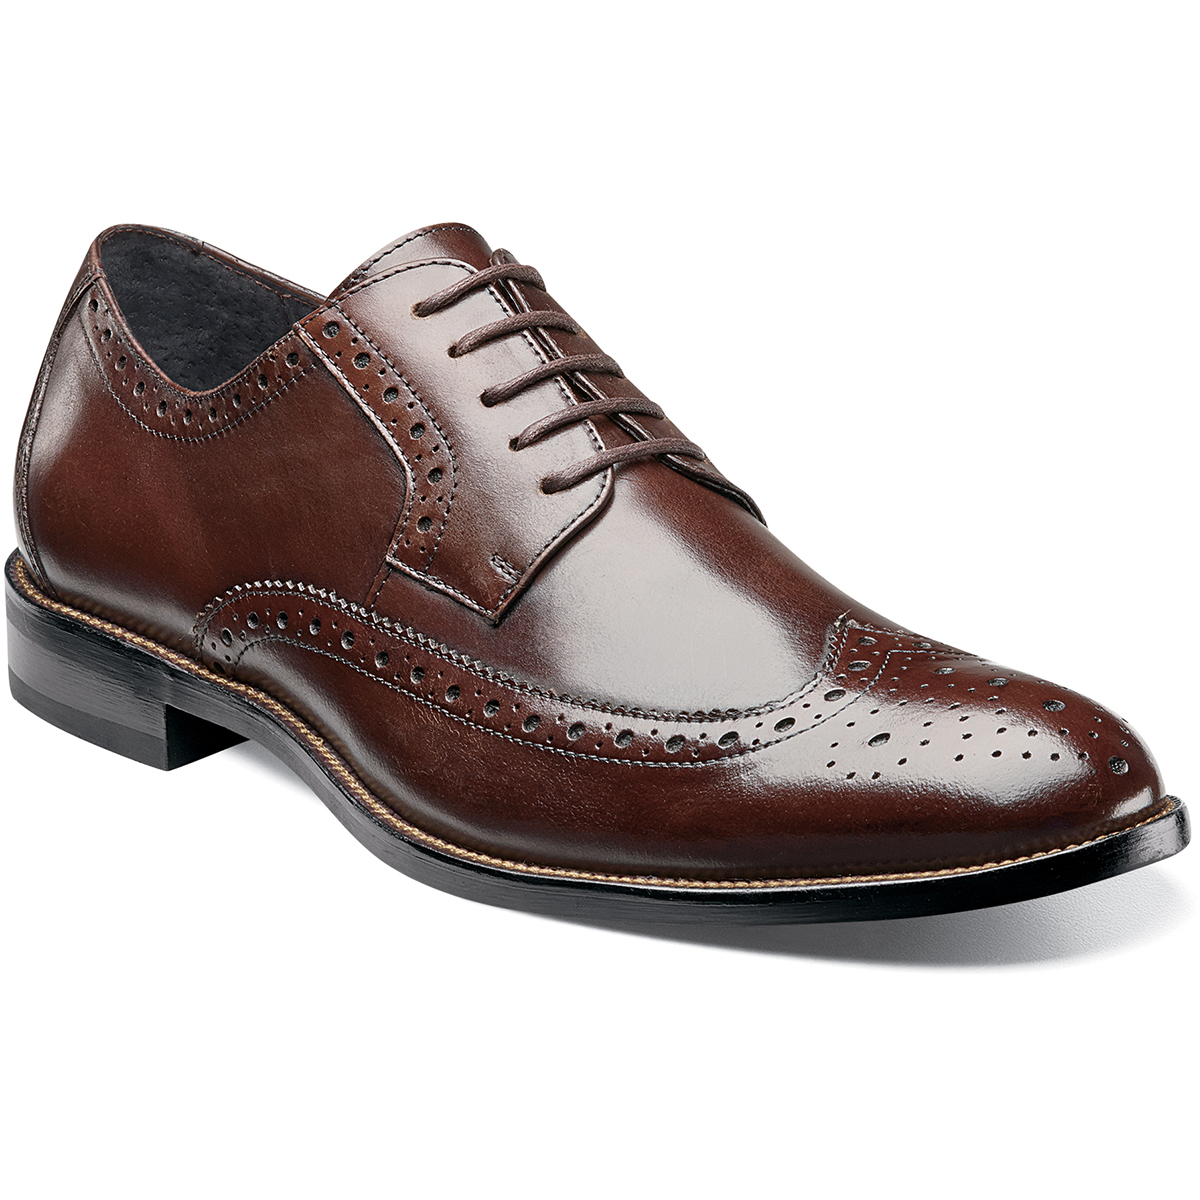 Men's Dress Shoes | Brown Wingtip Oxford | Stacy Adams Garrison